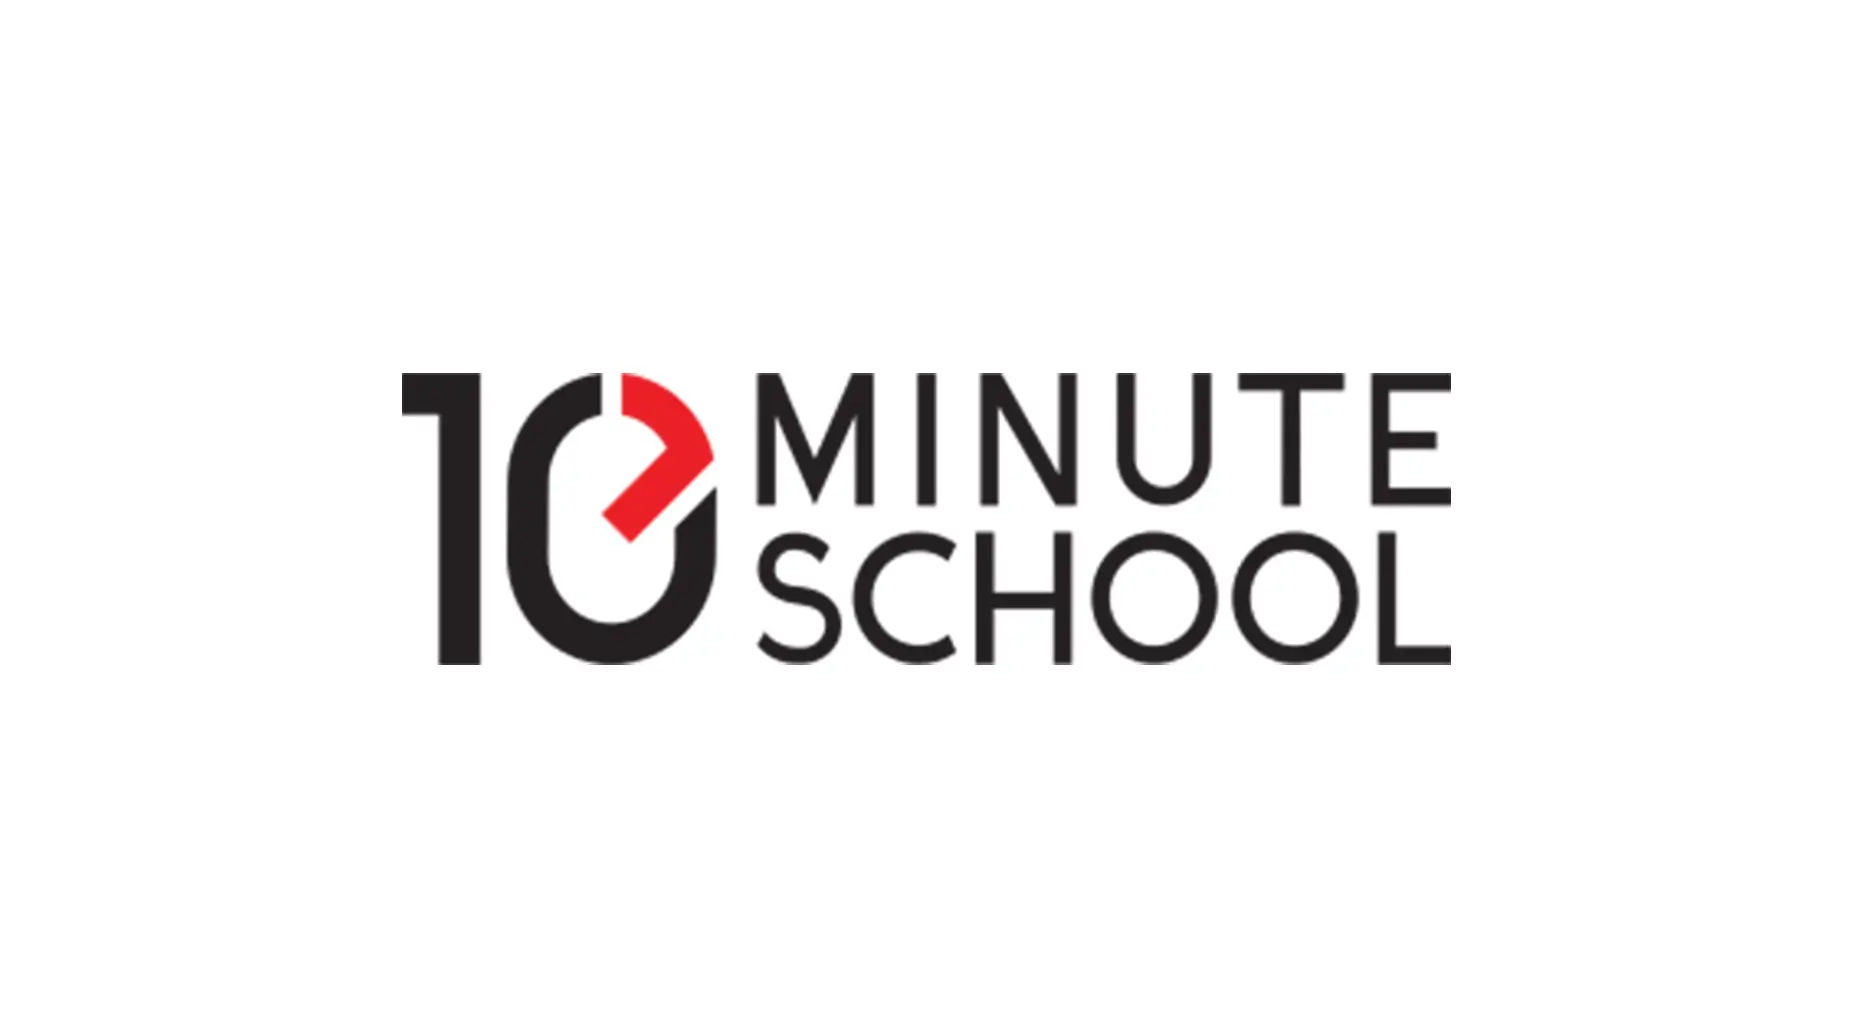 10 minute school